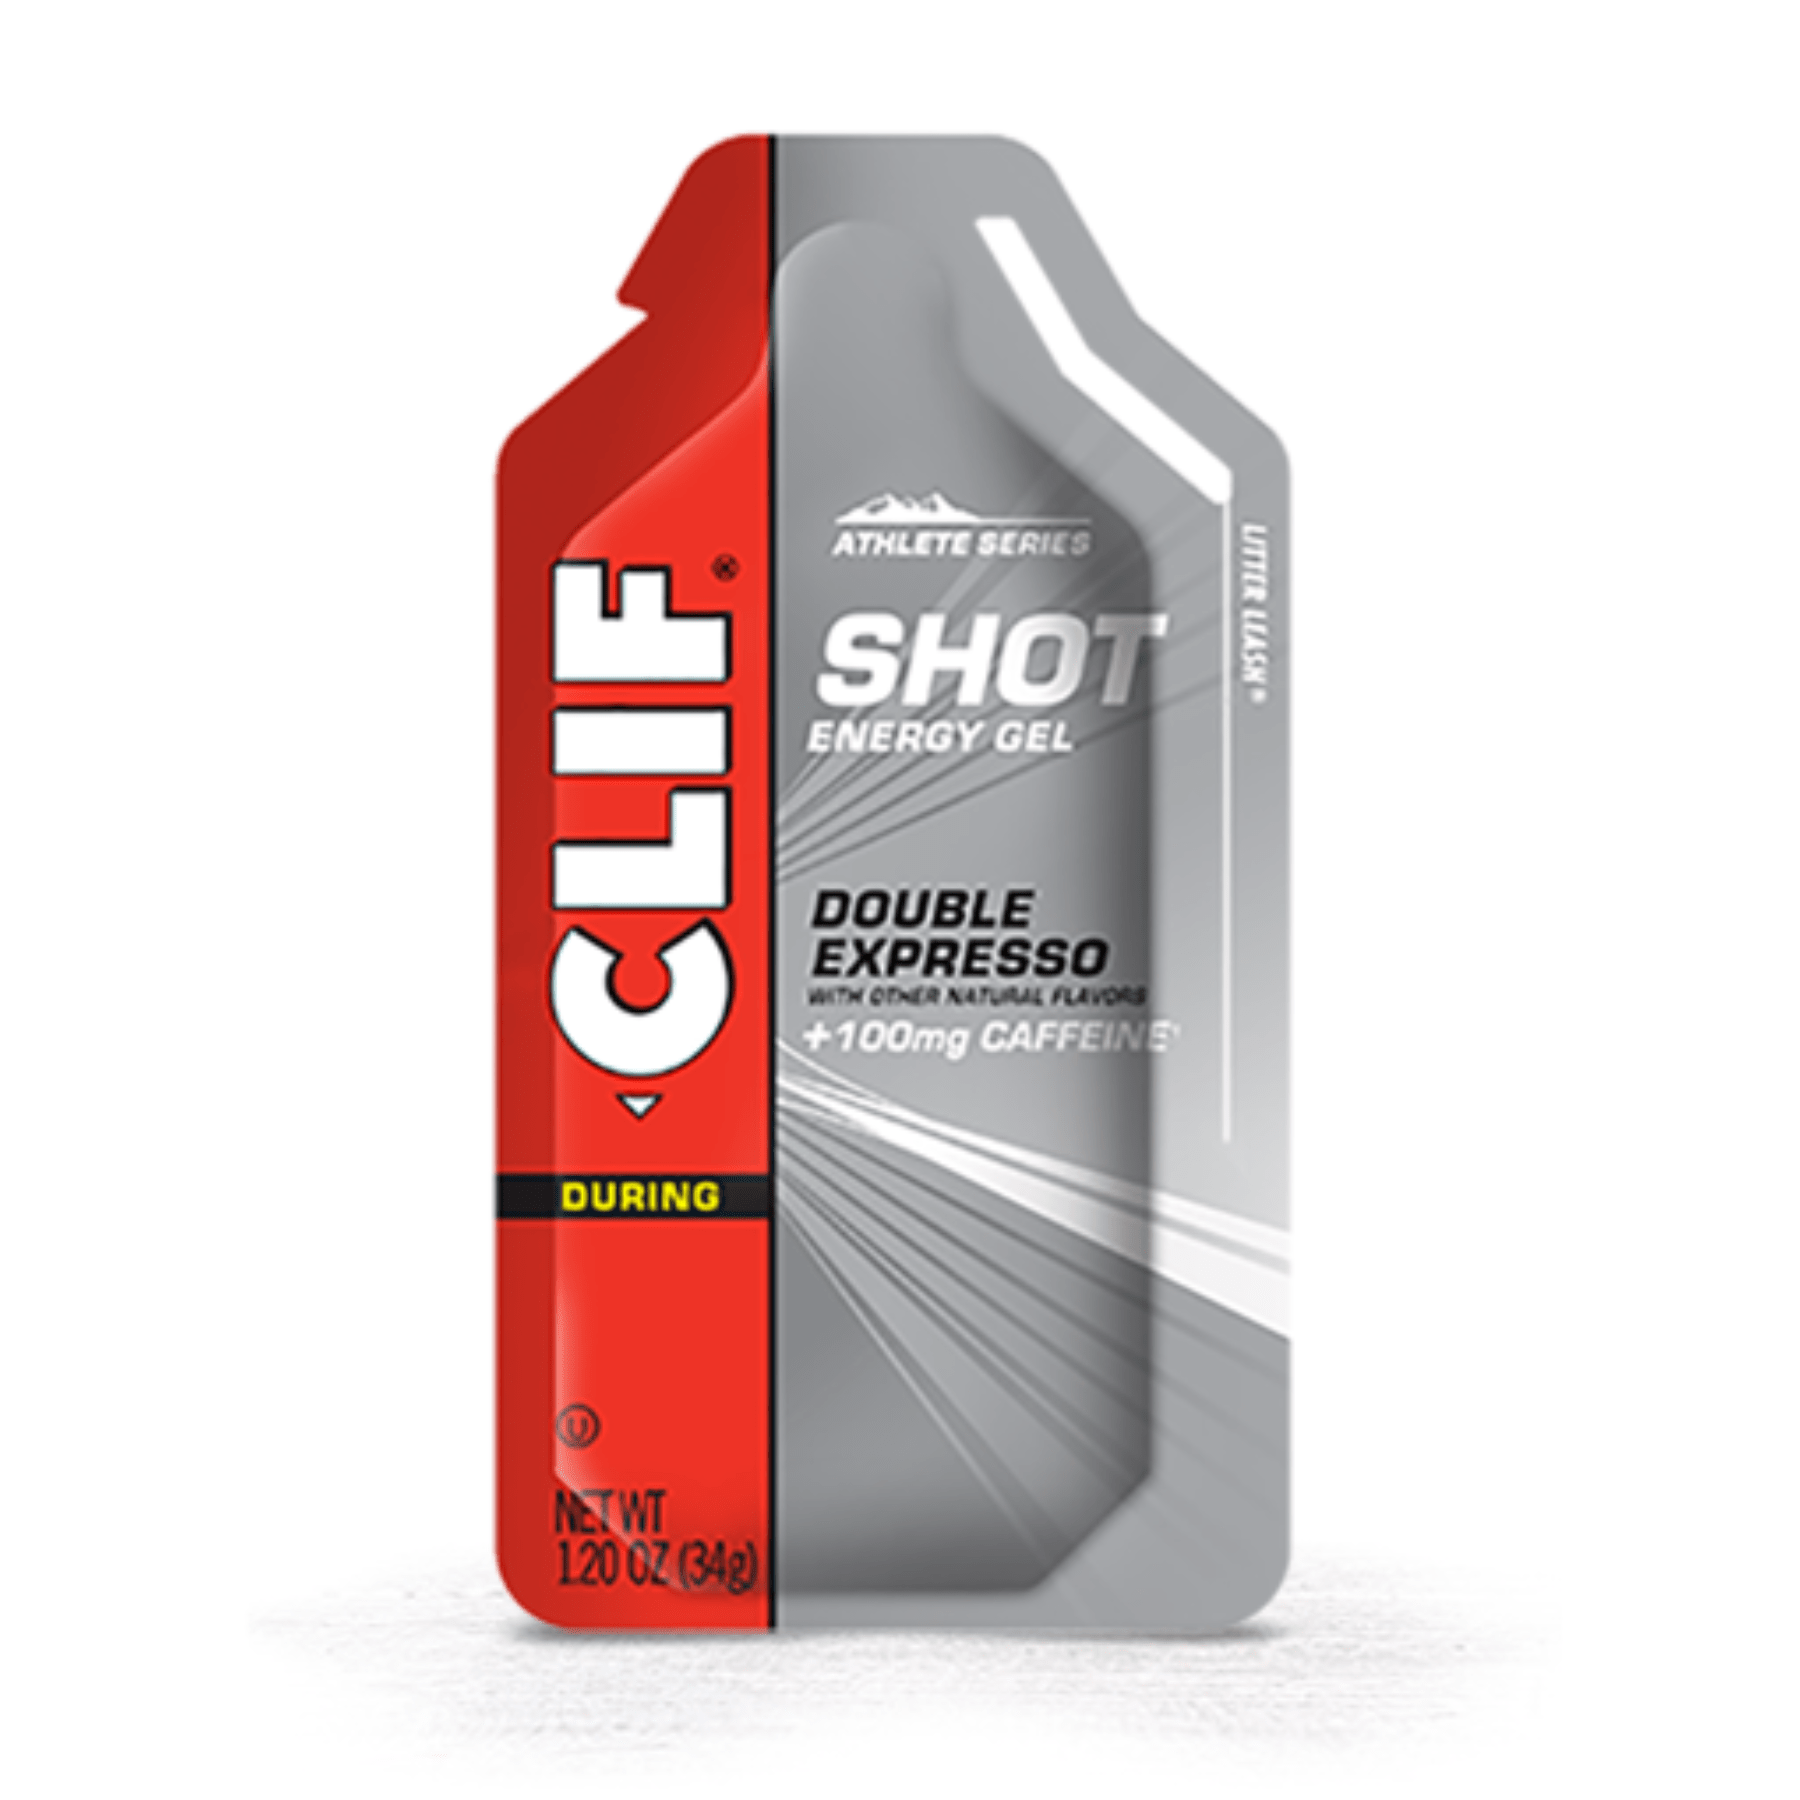 clif Energy Gel 1 / Double Expresso (100mg Caffeine) SHOT Energy Gel CLIF631